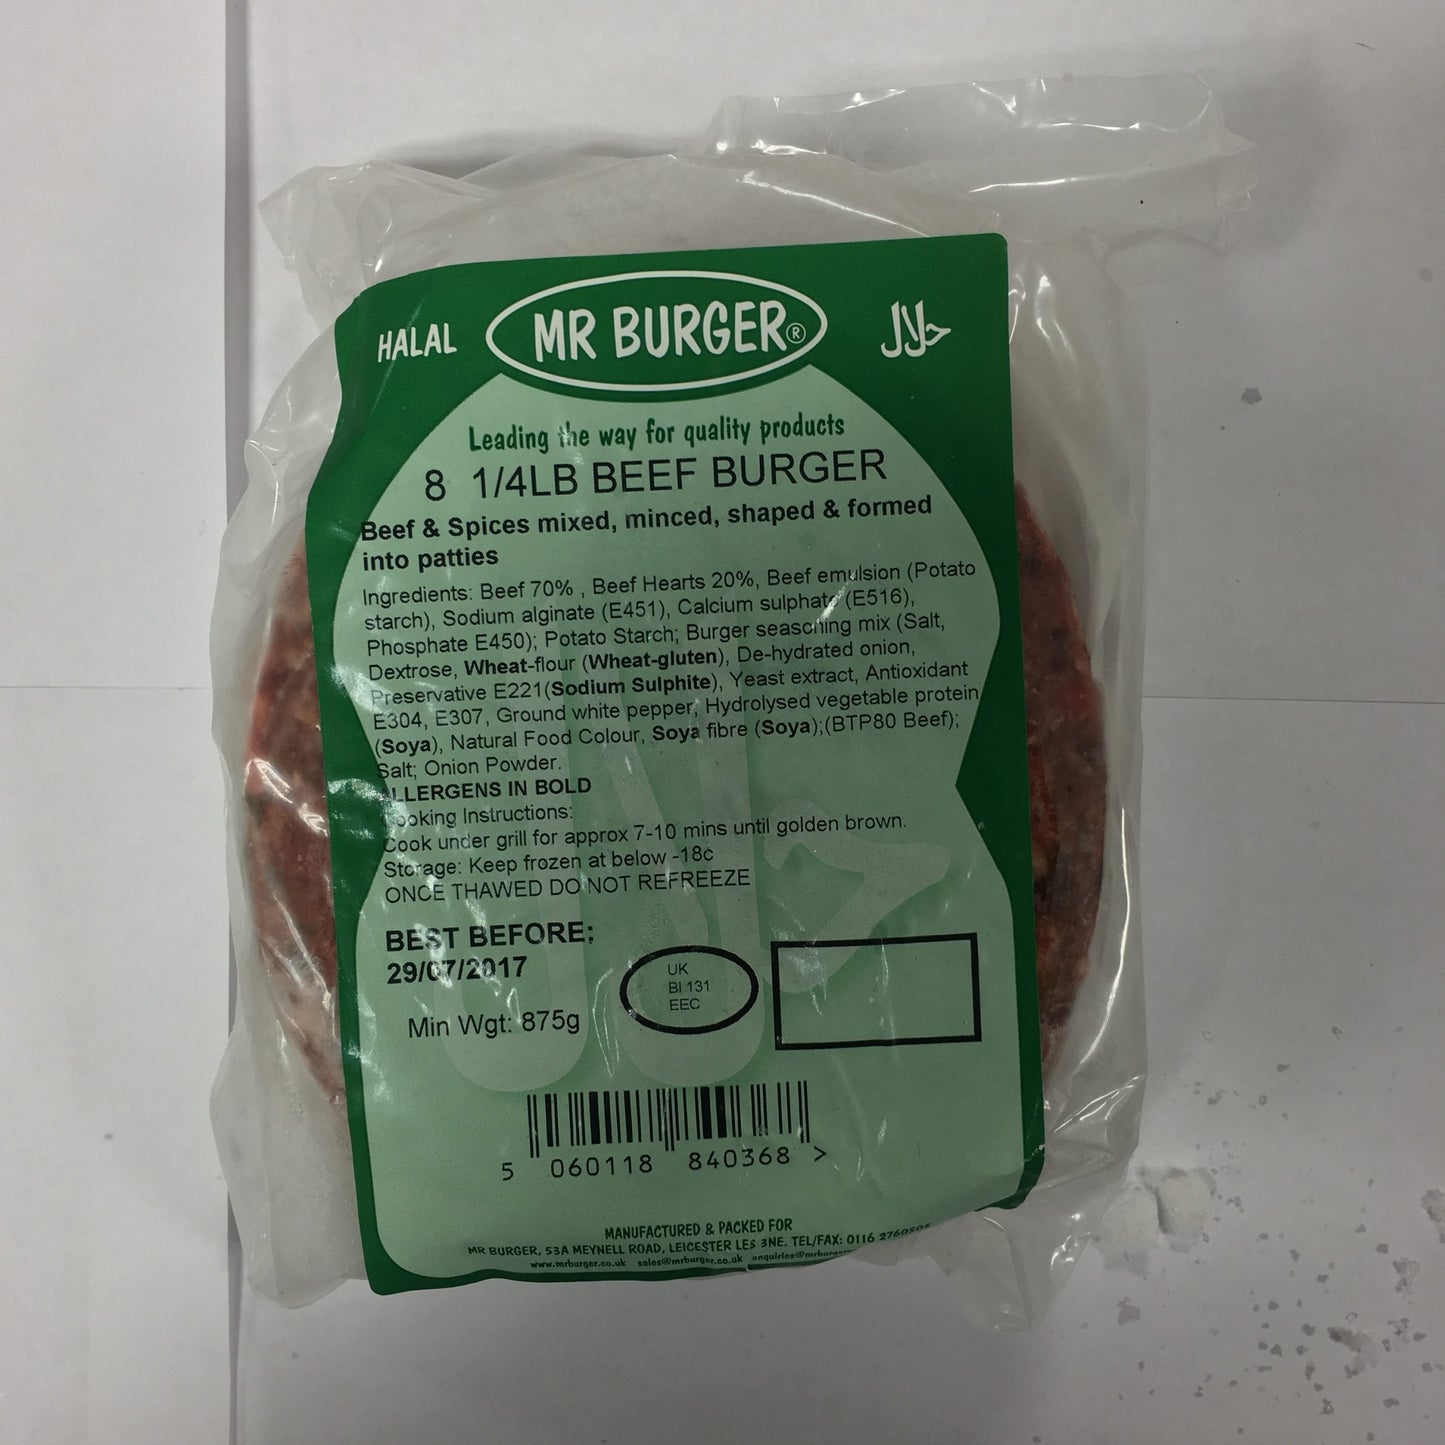 8 1/4LB Bugers - Beef